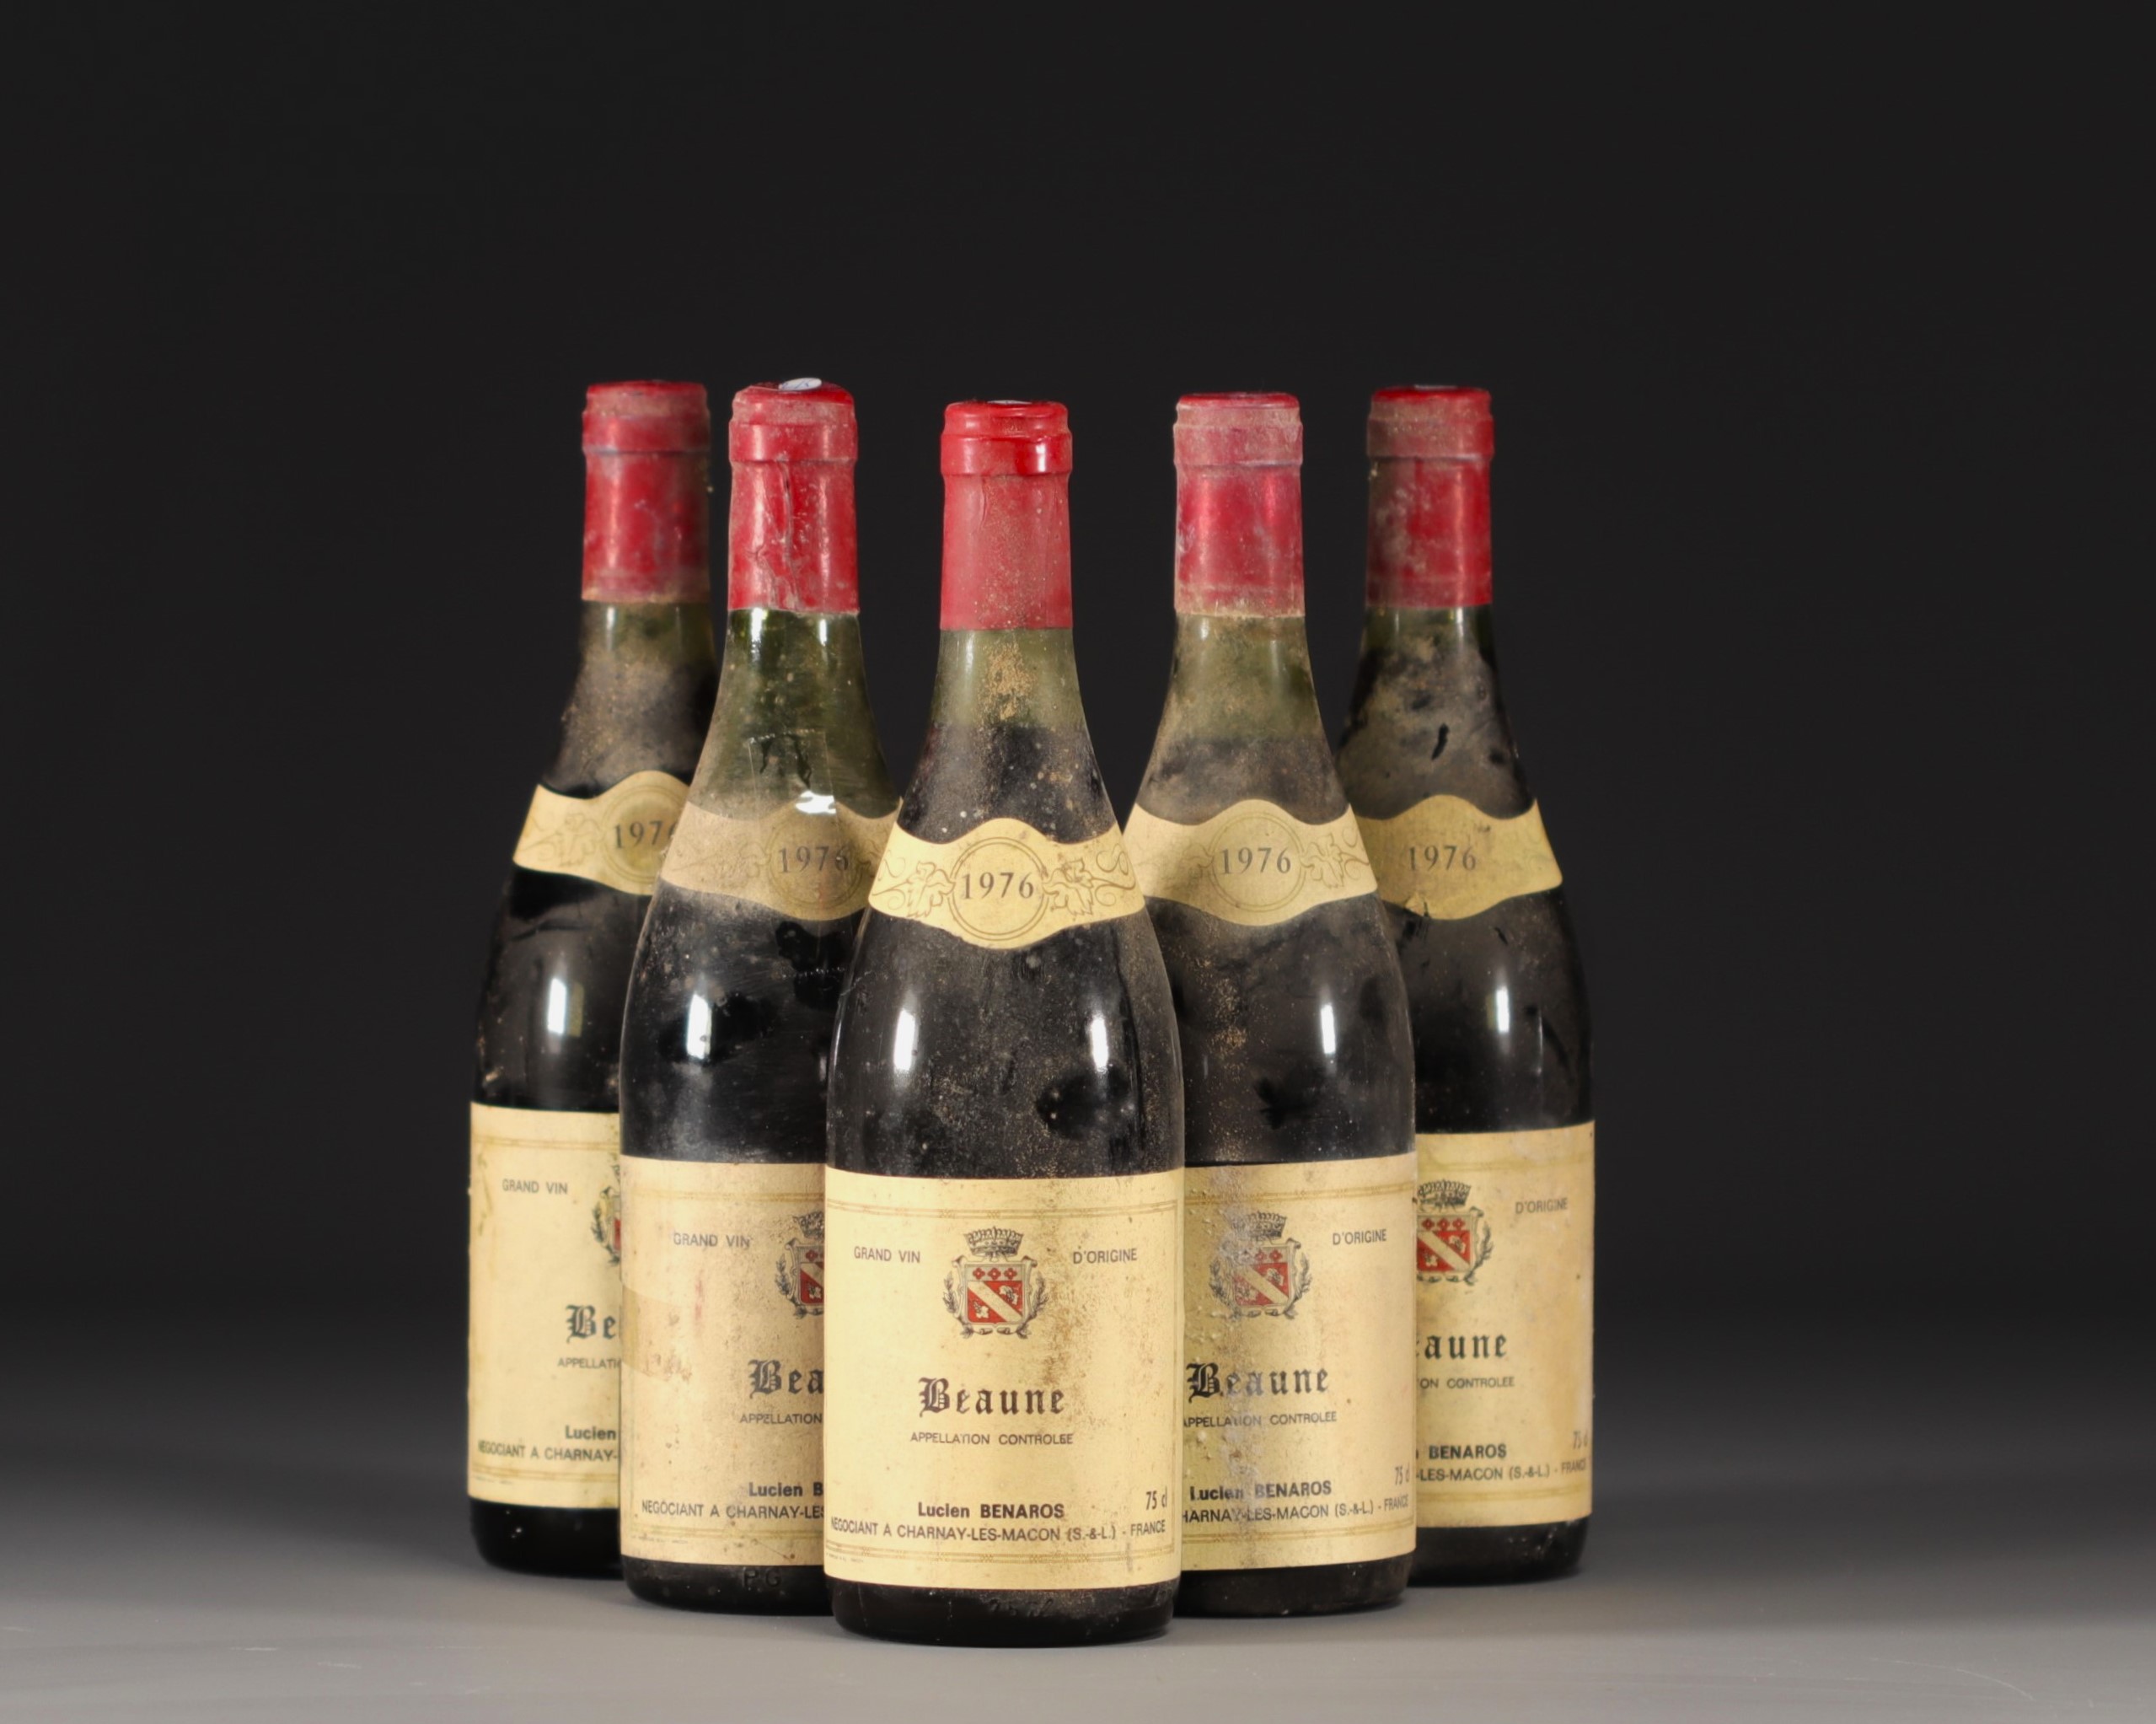 Lot of 5 bottles of wine "Beaune" 1976 Lucien BENAROS, Burgundy.